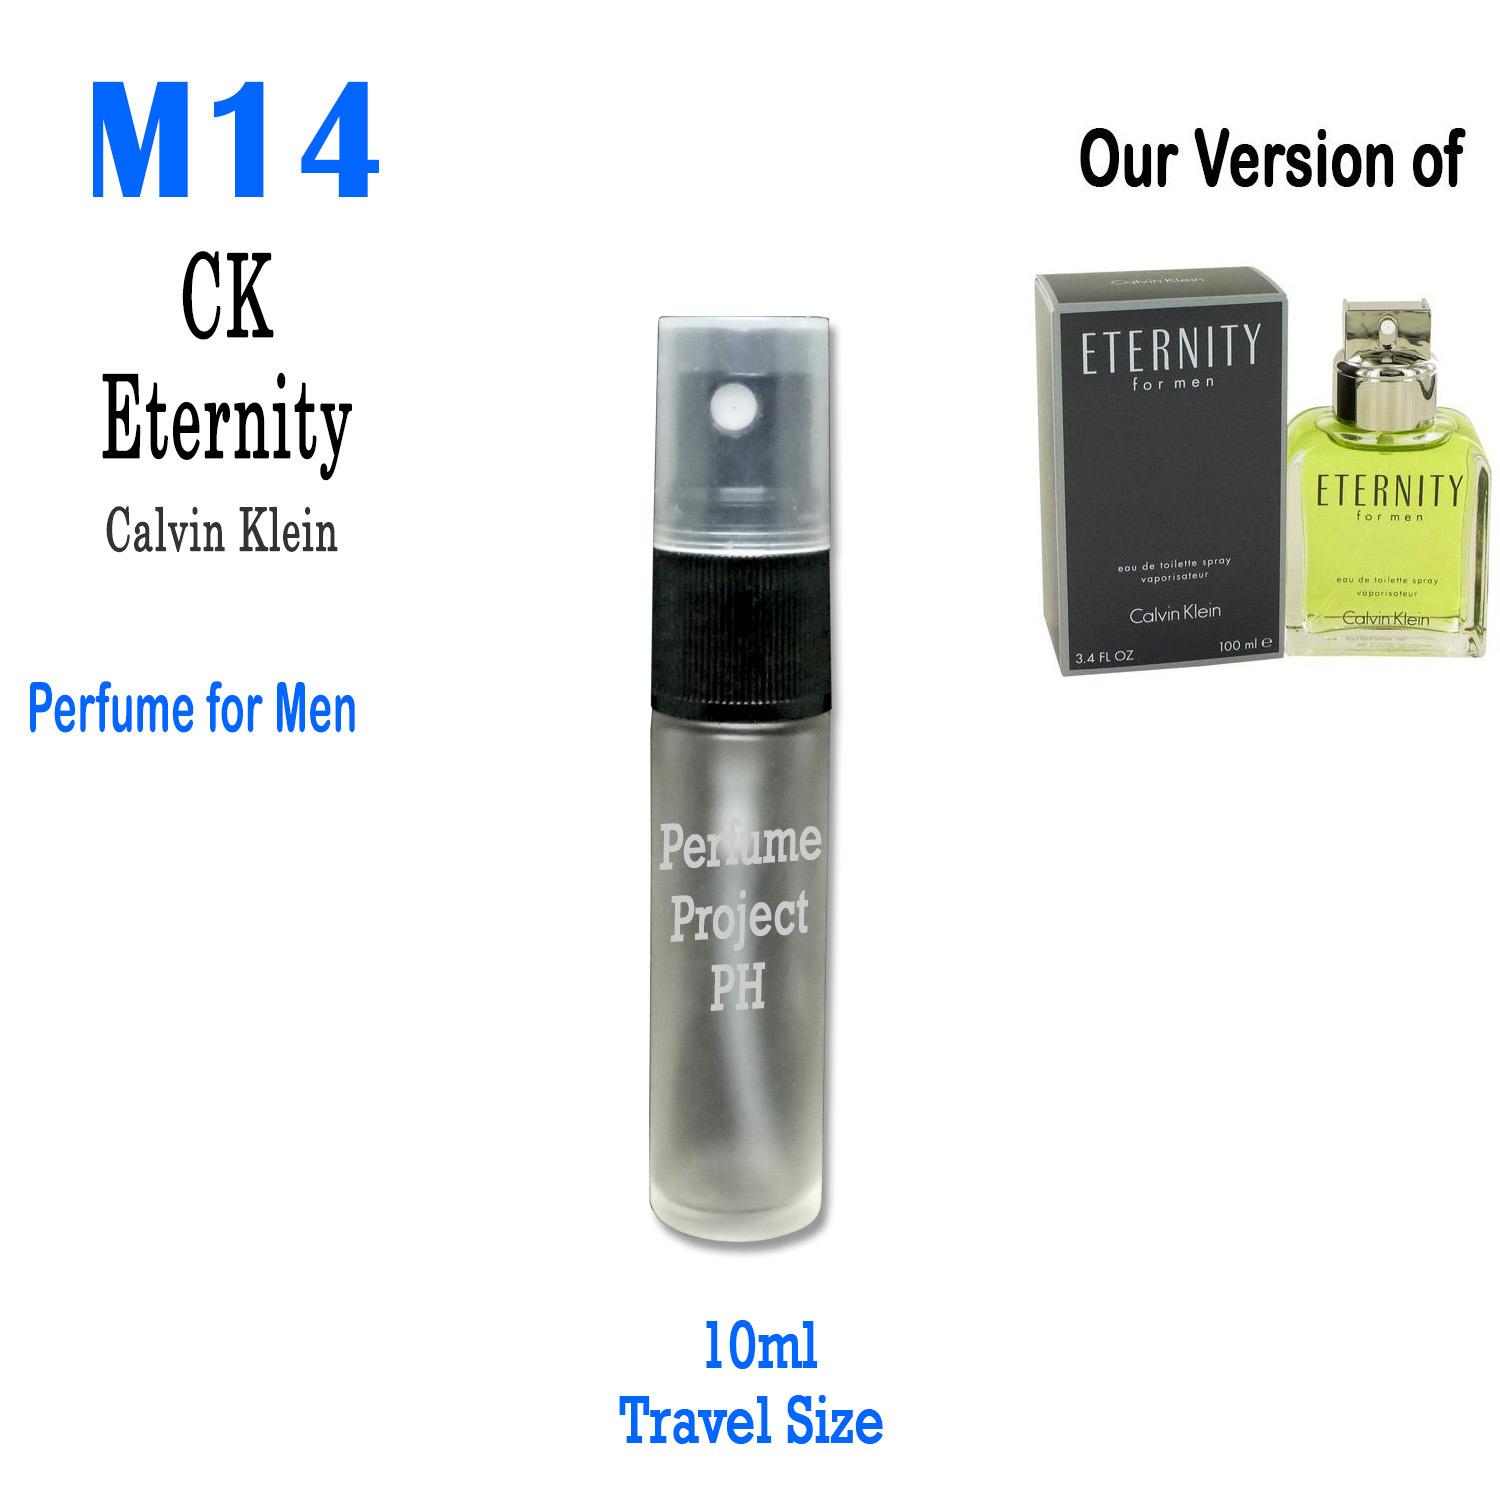 ck oil perfume